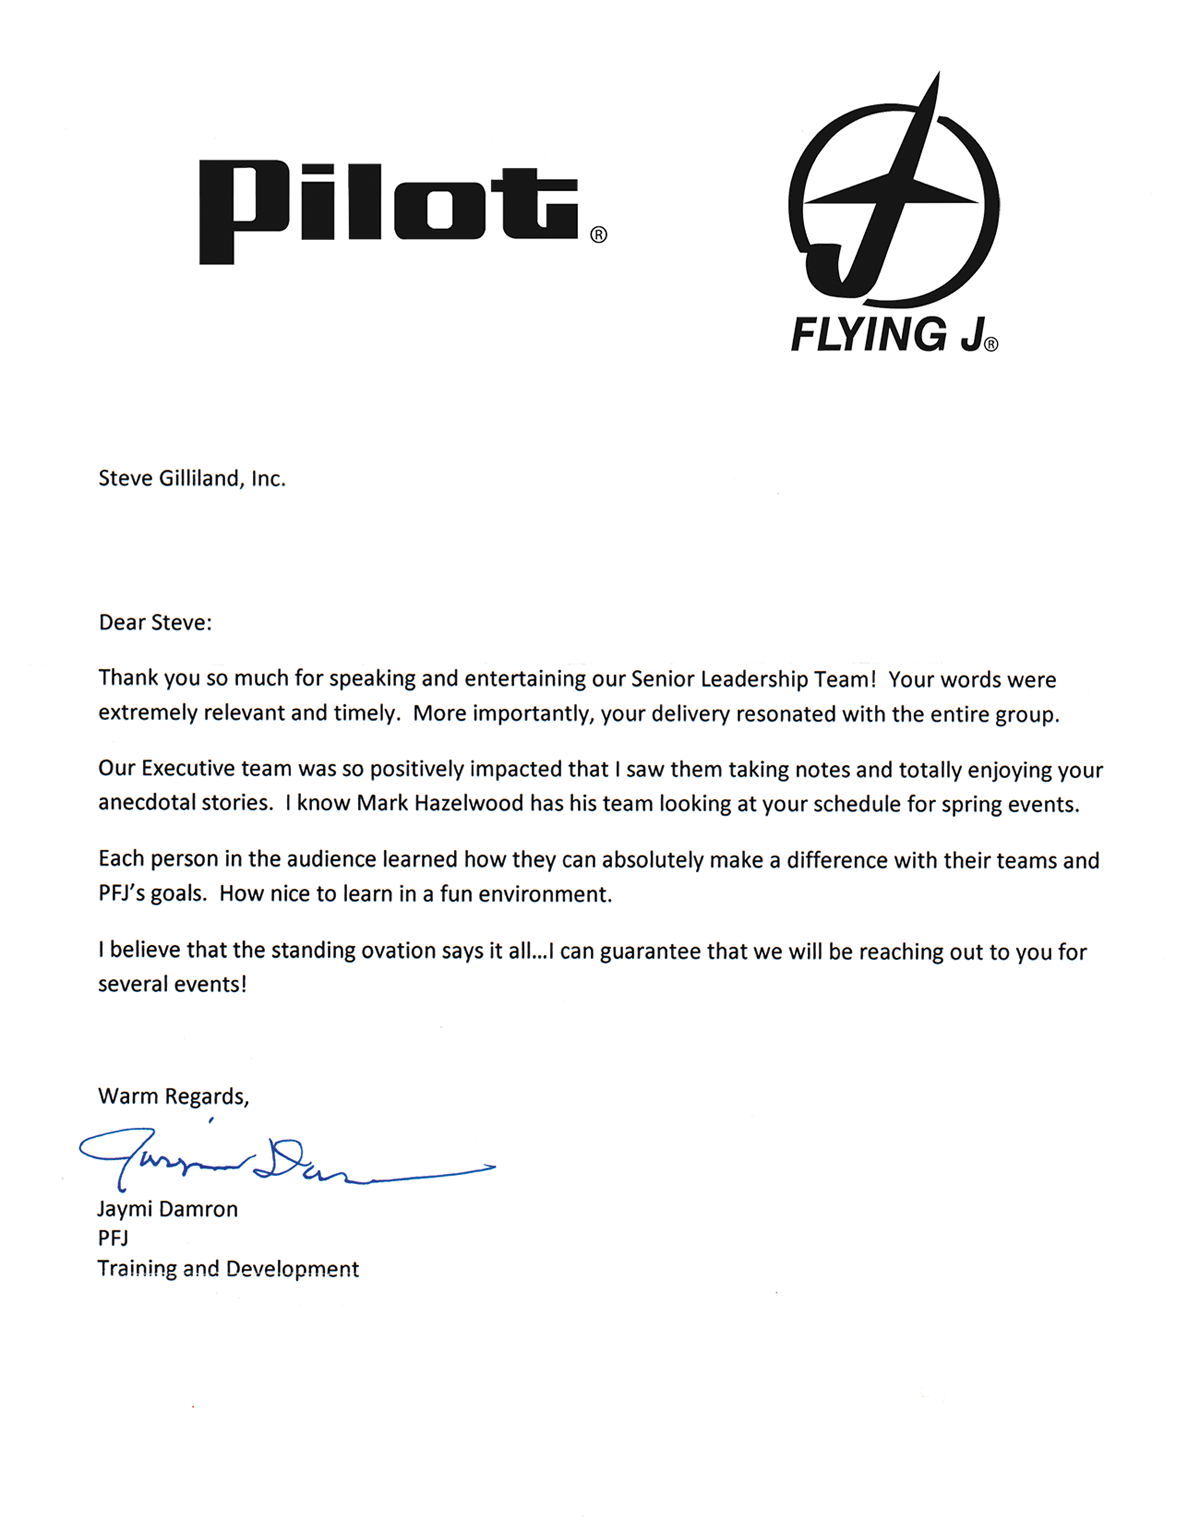 PilotFlying-J